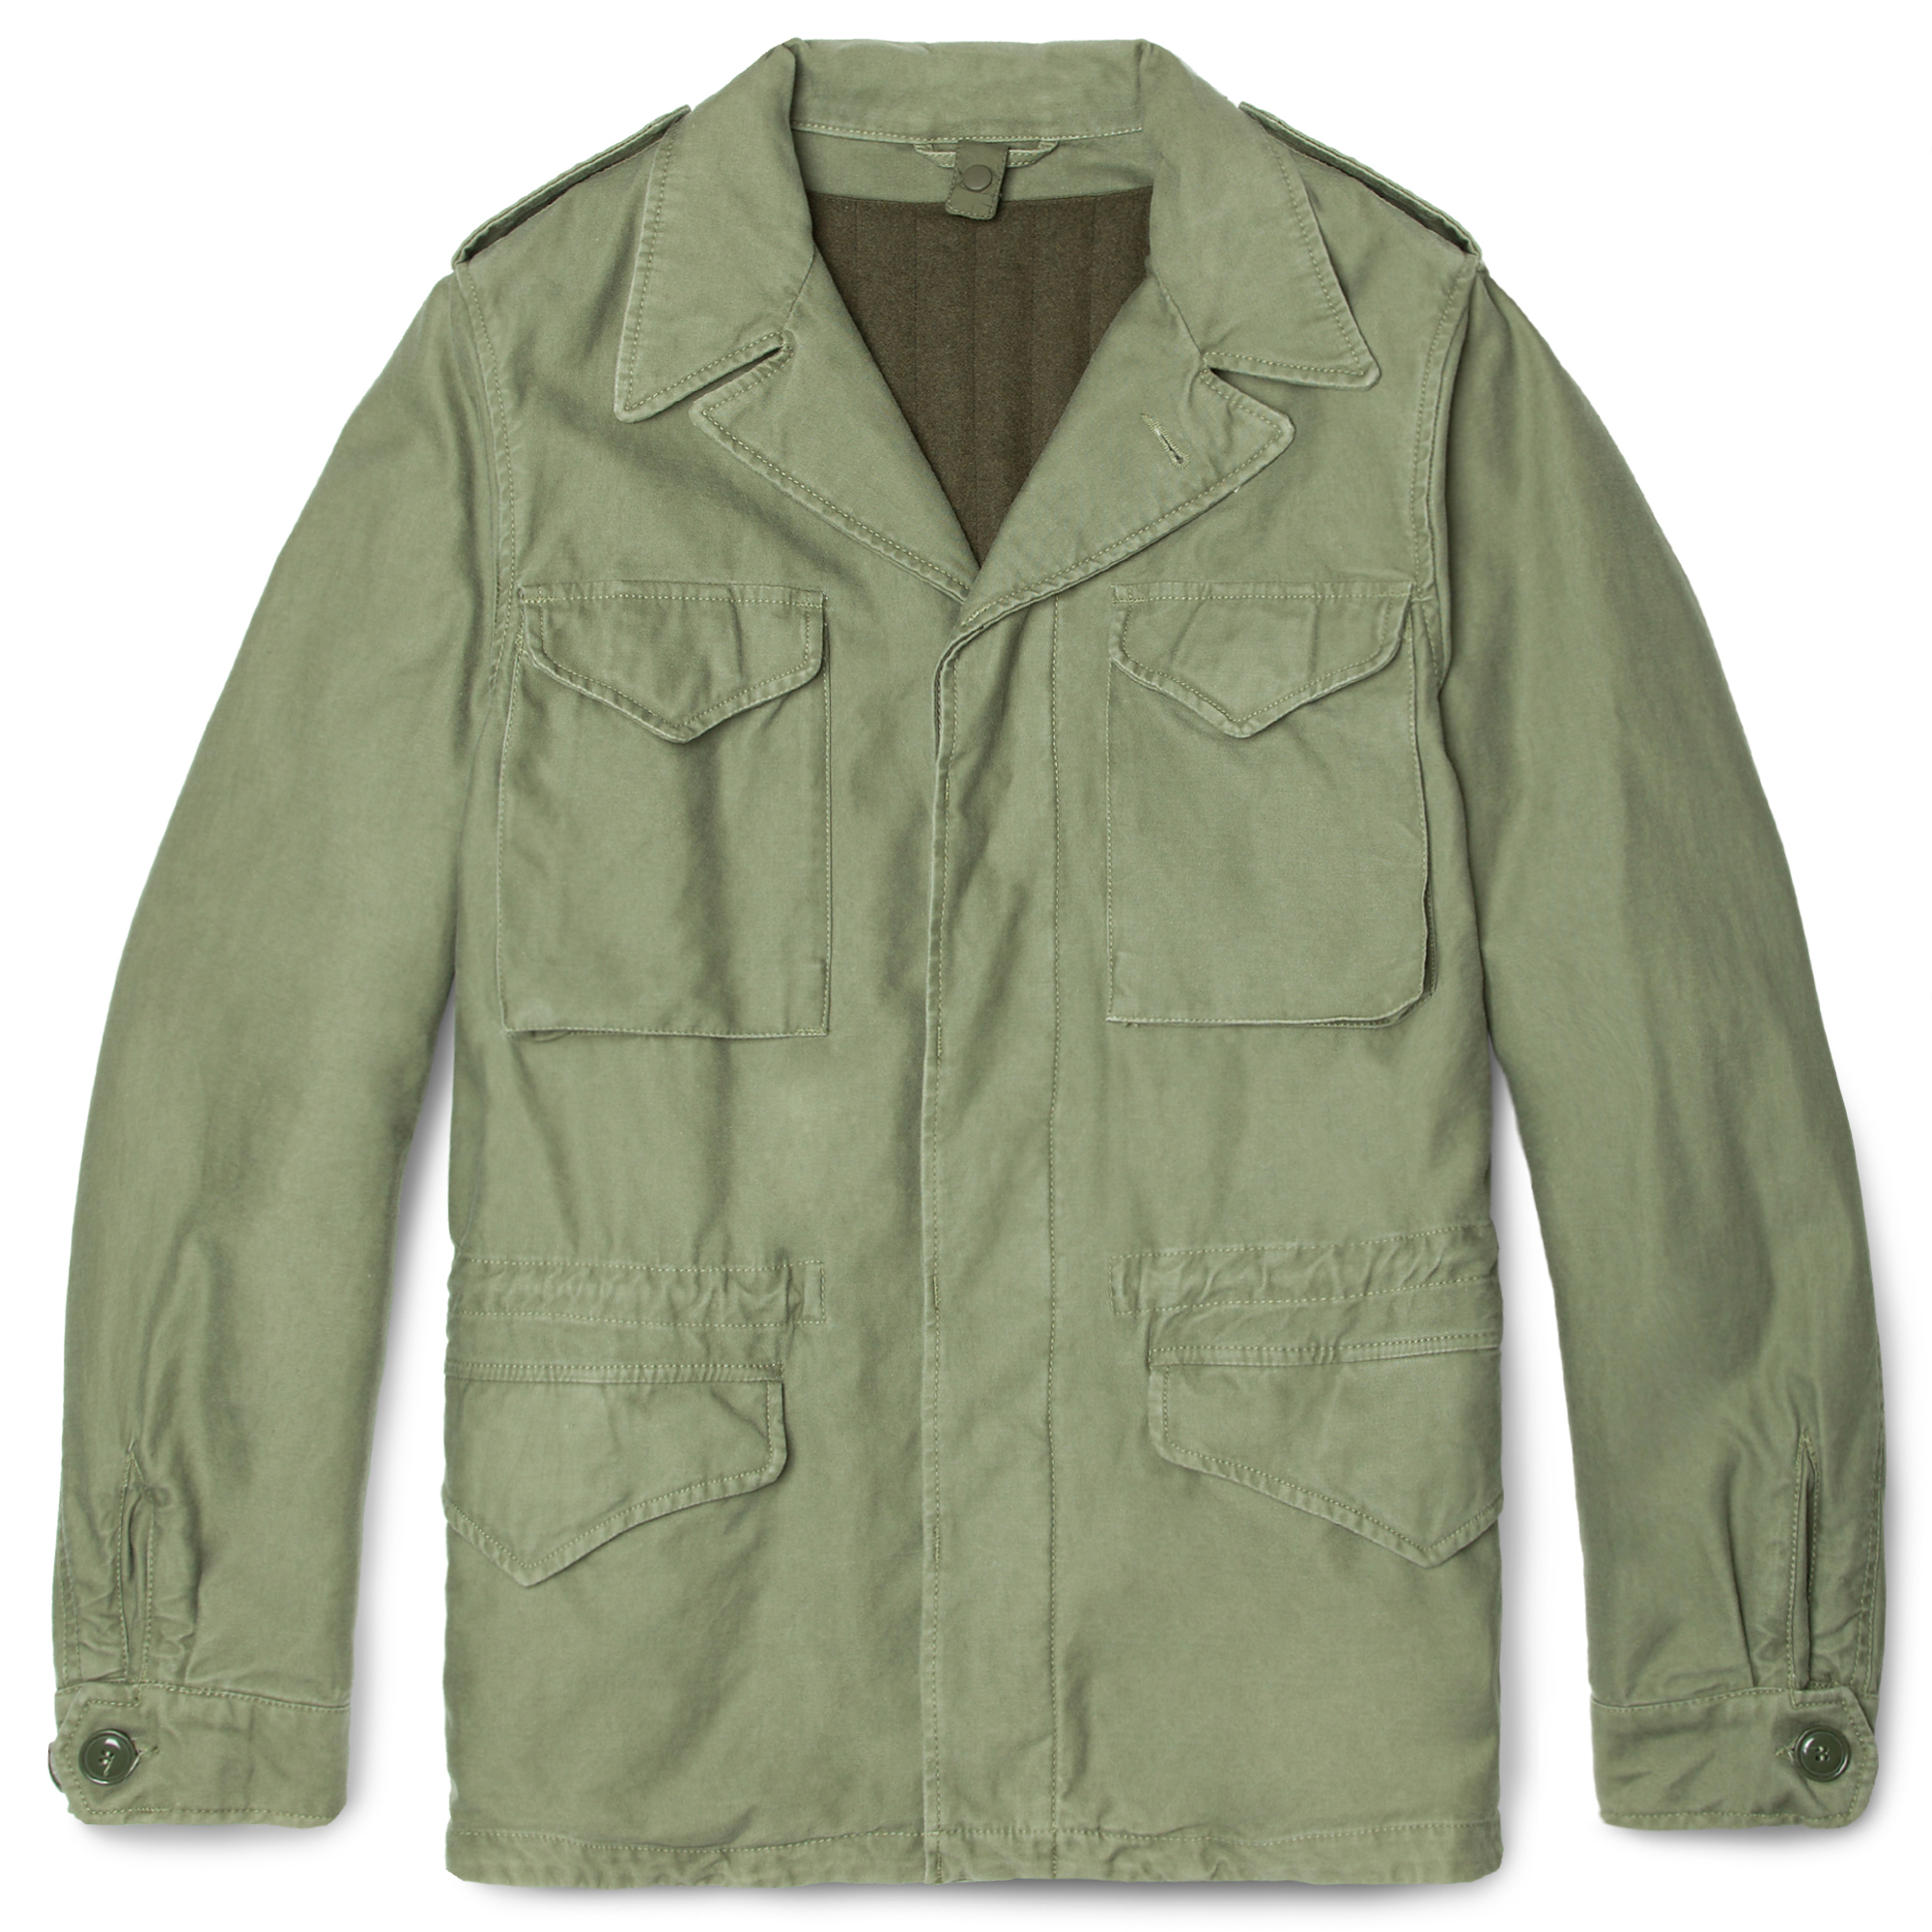 Aspesi Field Jacket M43 in Cotton in Military Green (Green) for Men - Lyst